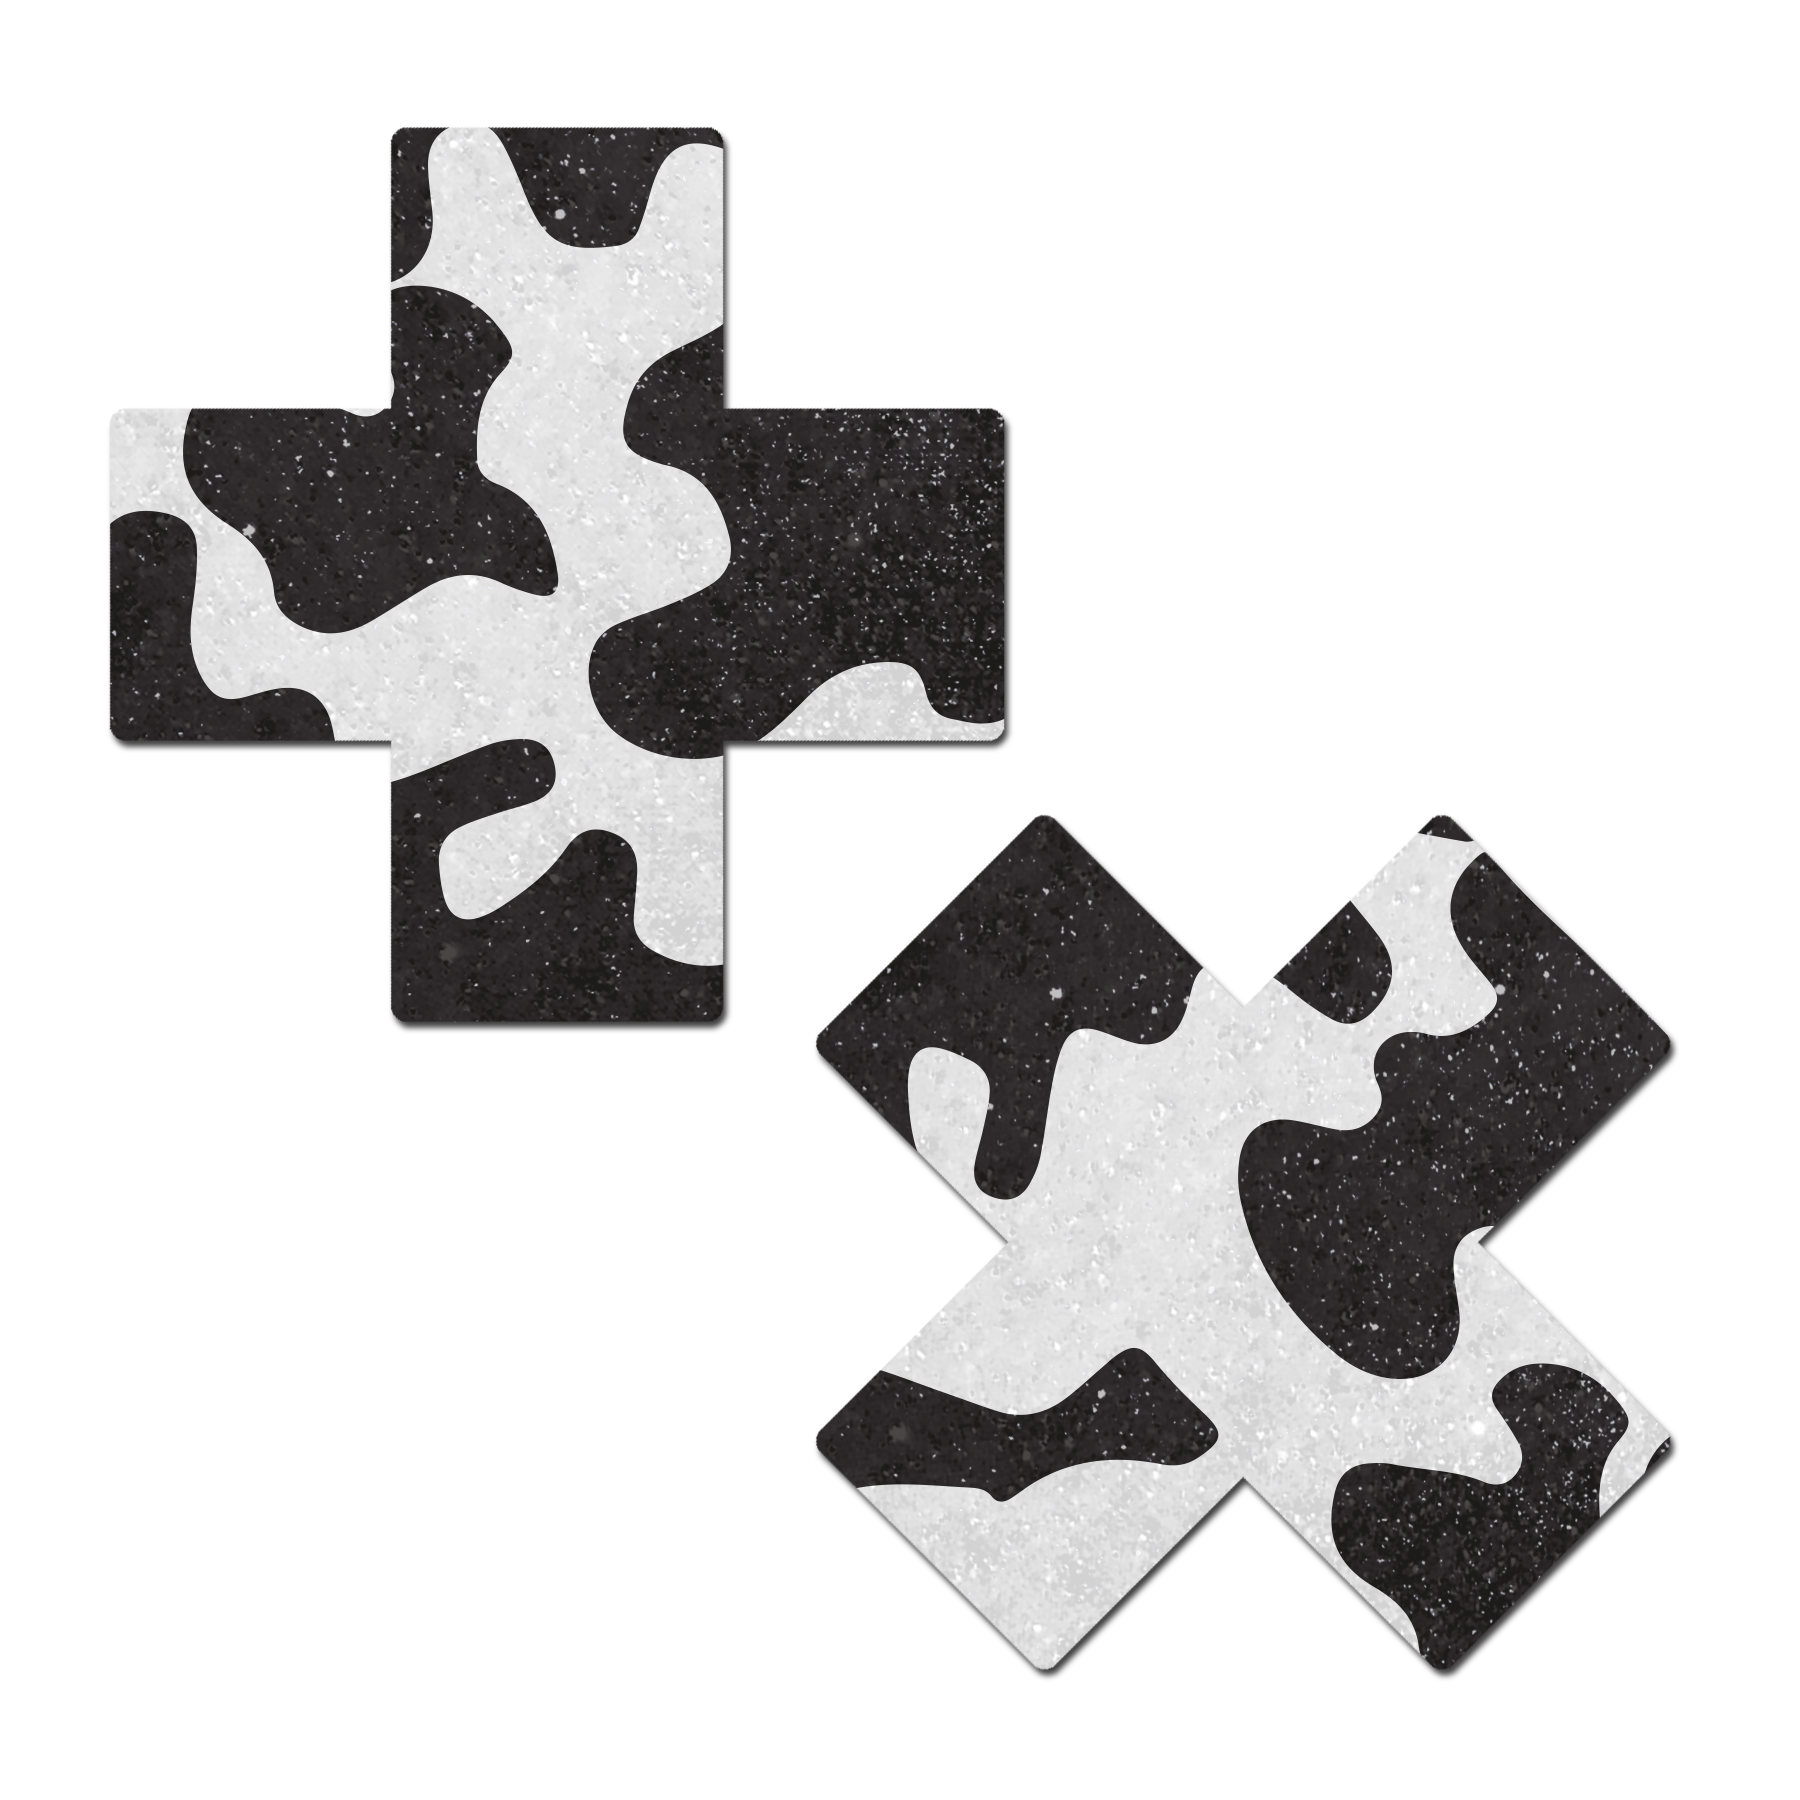 5-Pack: Plus X: Black & White Cow Print Cross Nipple Pasties by Pastease®